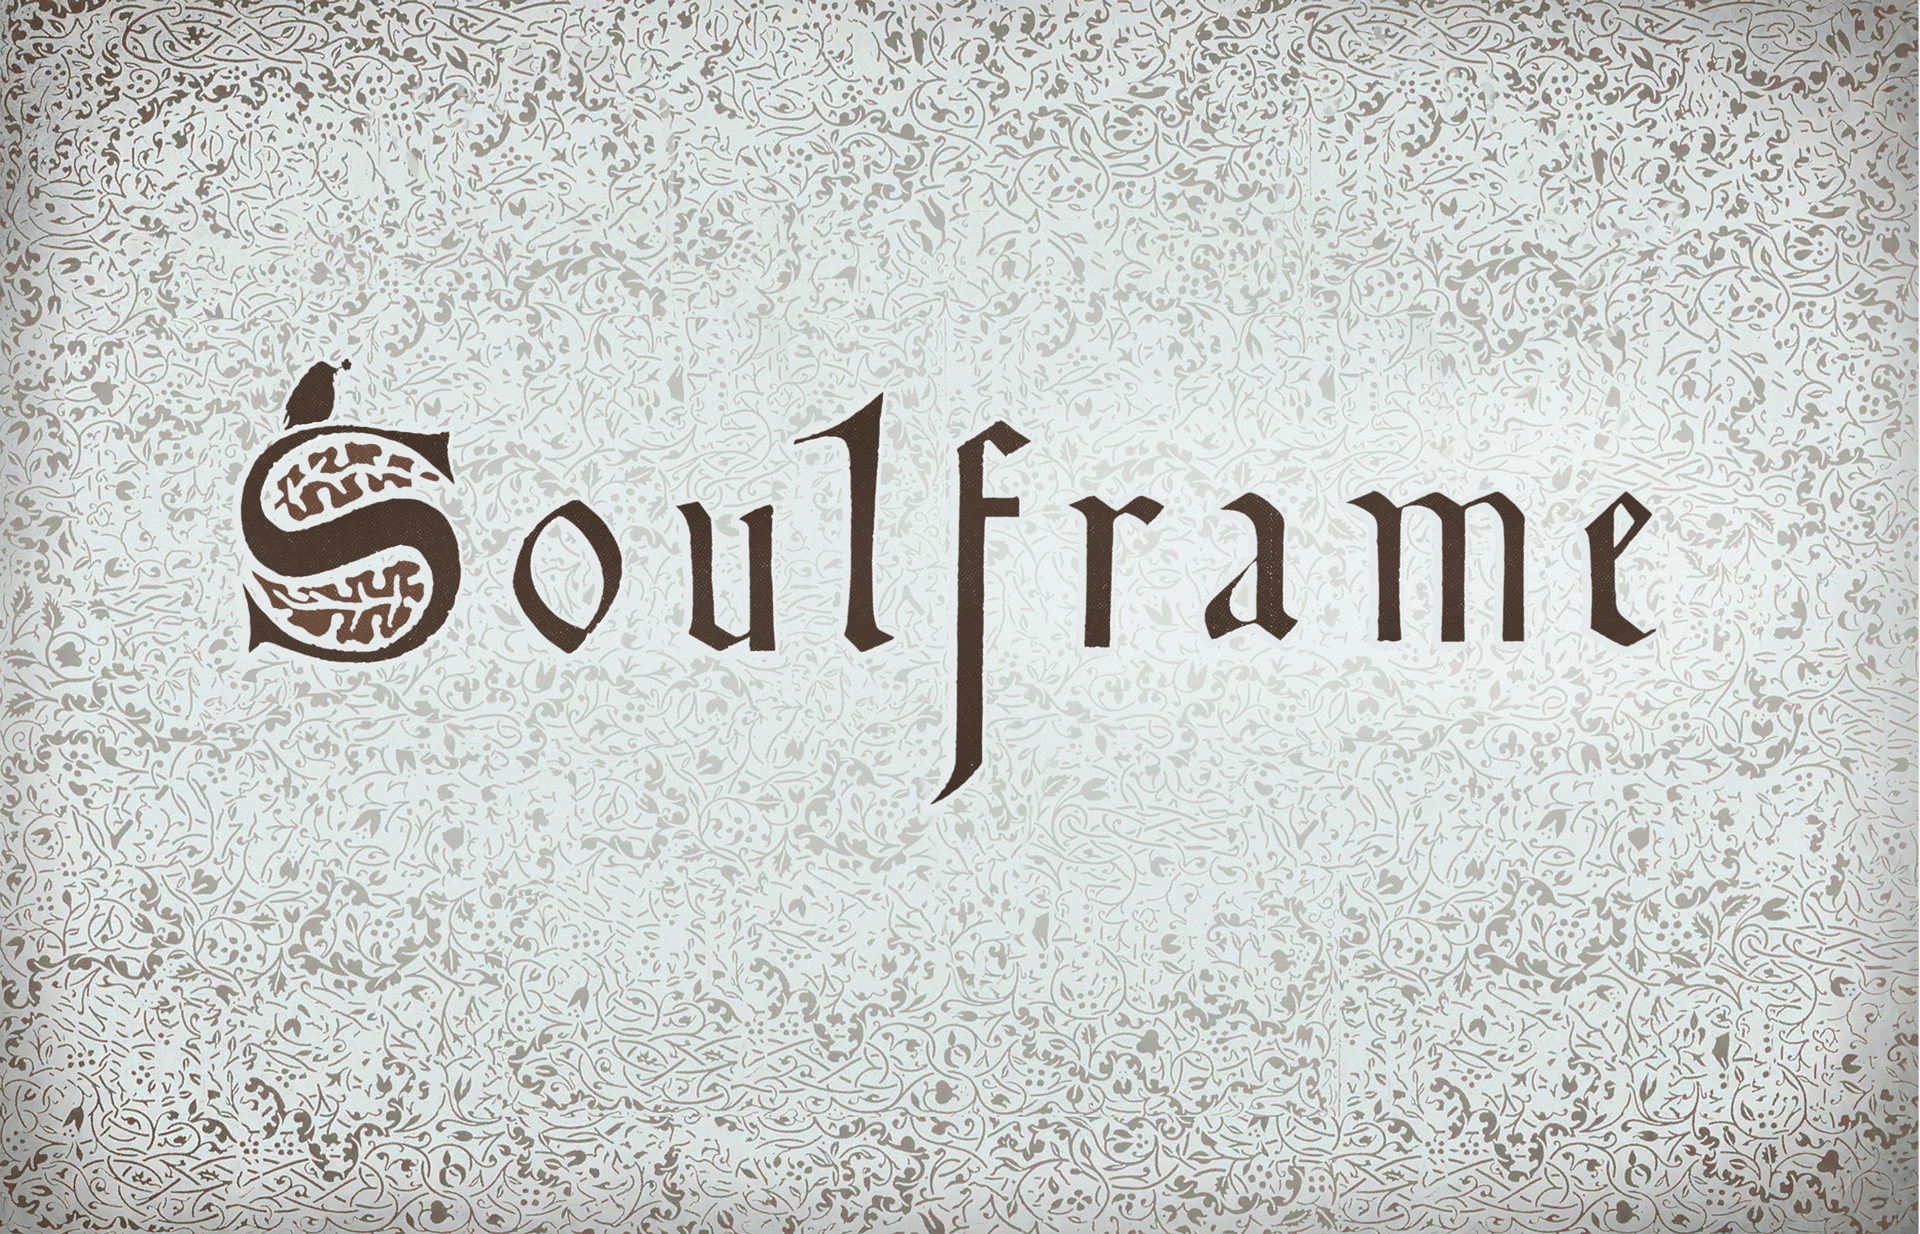 Warframe Dev's announce new MMORPG "Soulframe"